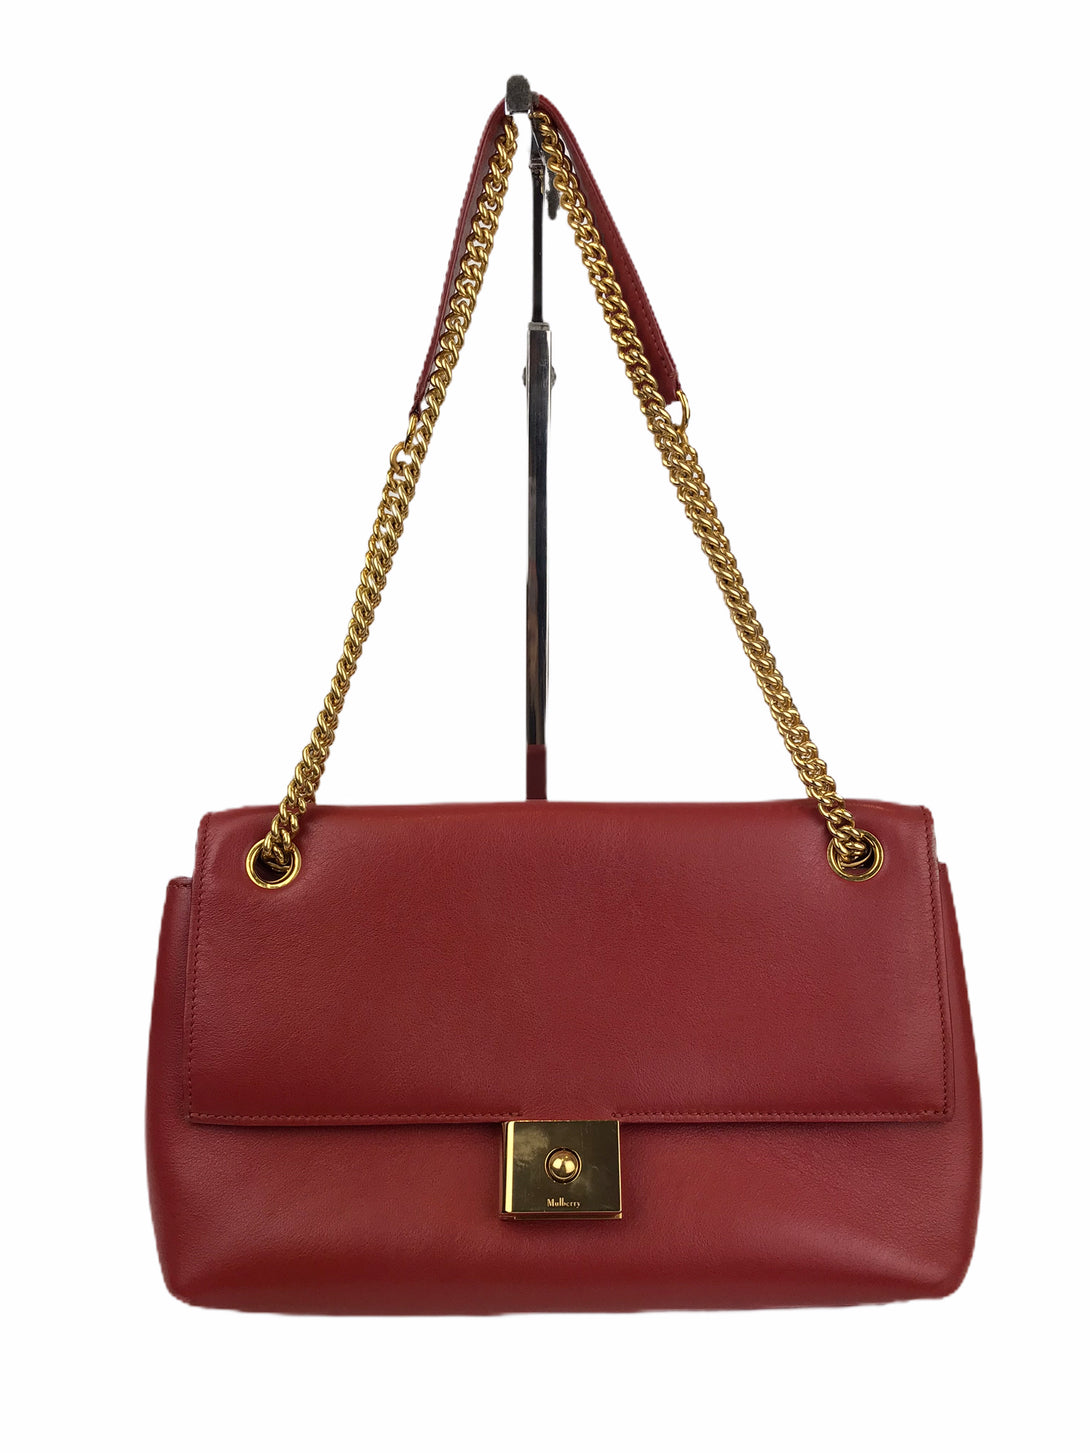 Mulberry Red ‘Cheyne’ Handbag - As Seen on Instagram 23/8/2020 - Siopaella Designer Exchange